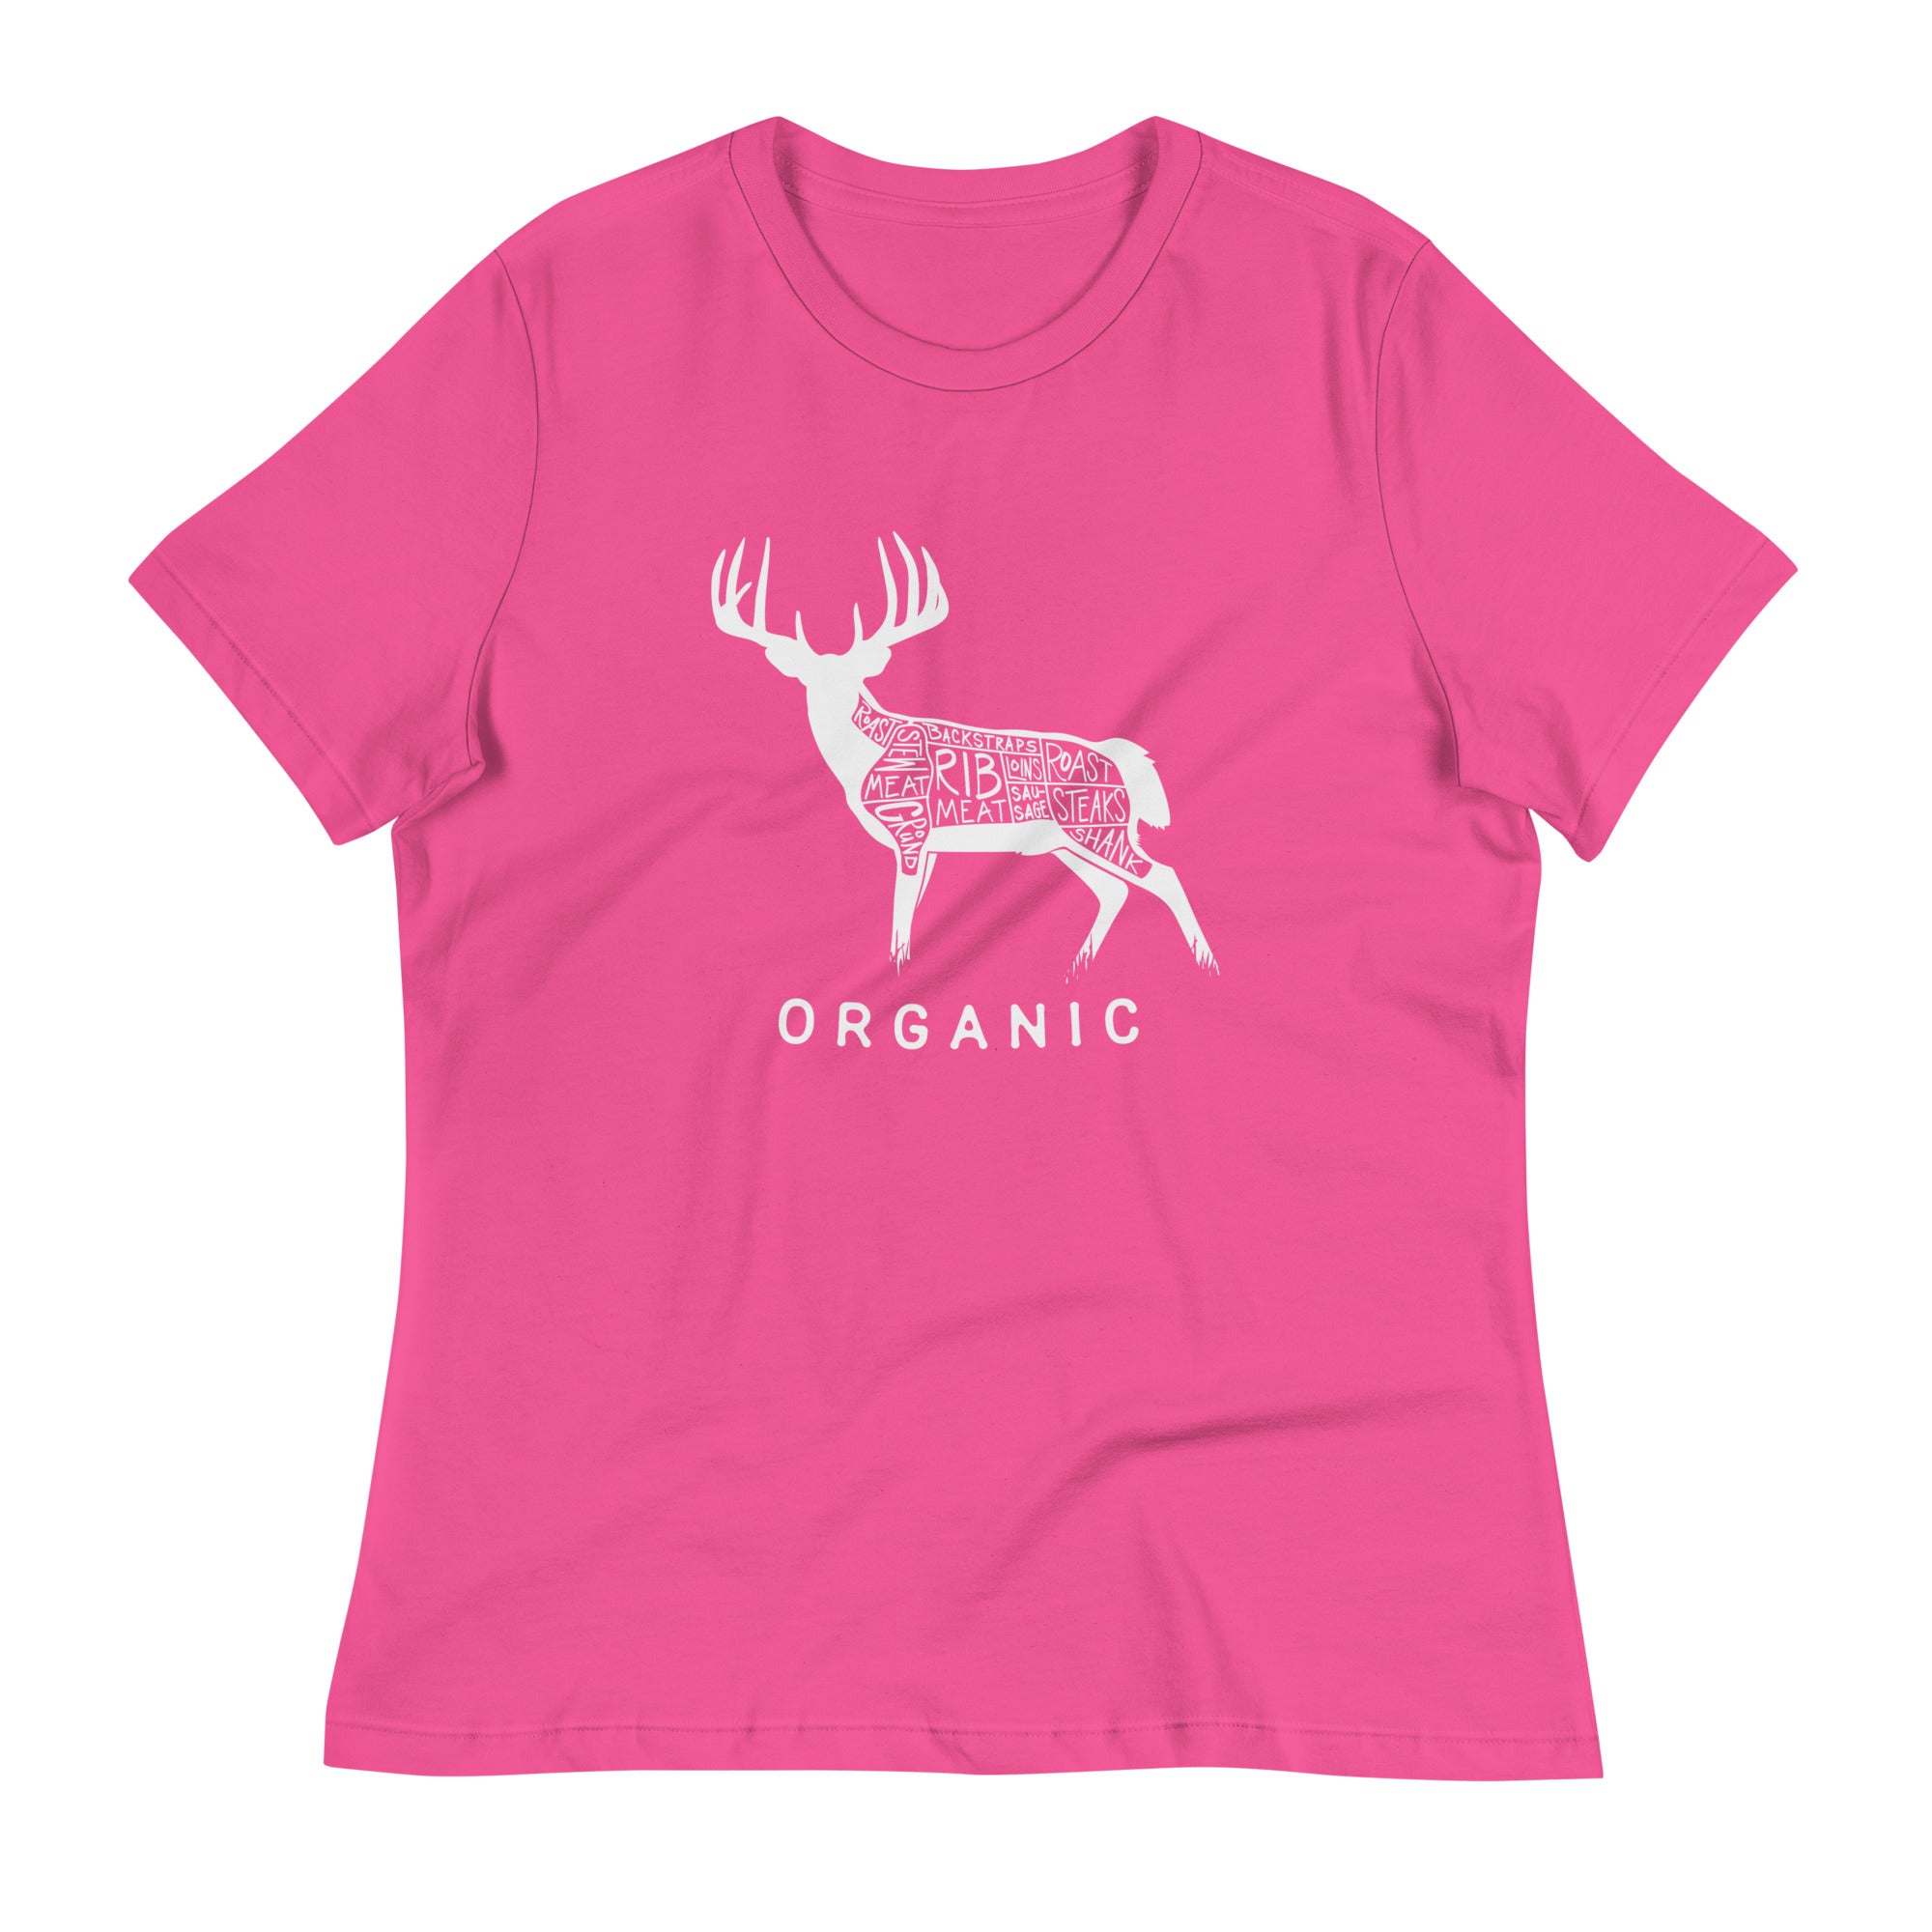 Women's Organic Whitetail T-Shirt